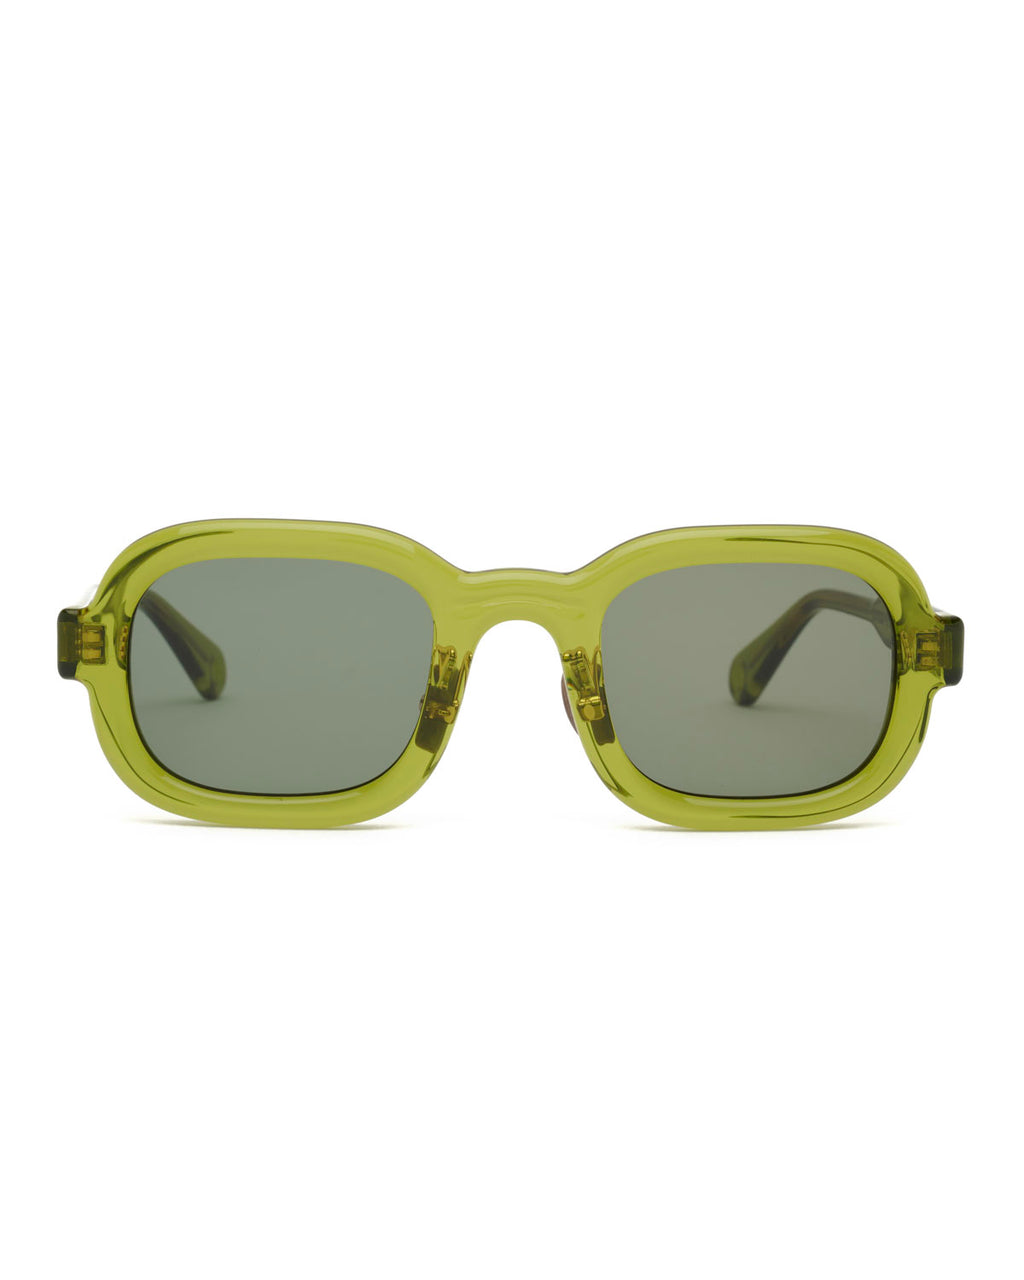 Newman Post Modern Primitive Eye Protection - Green